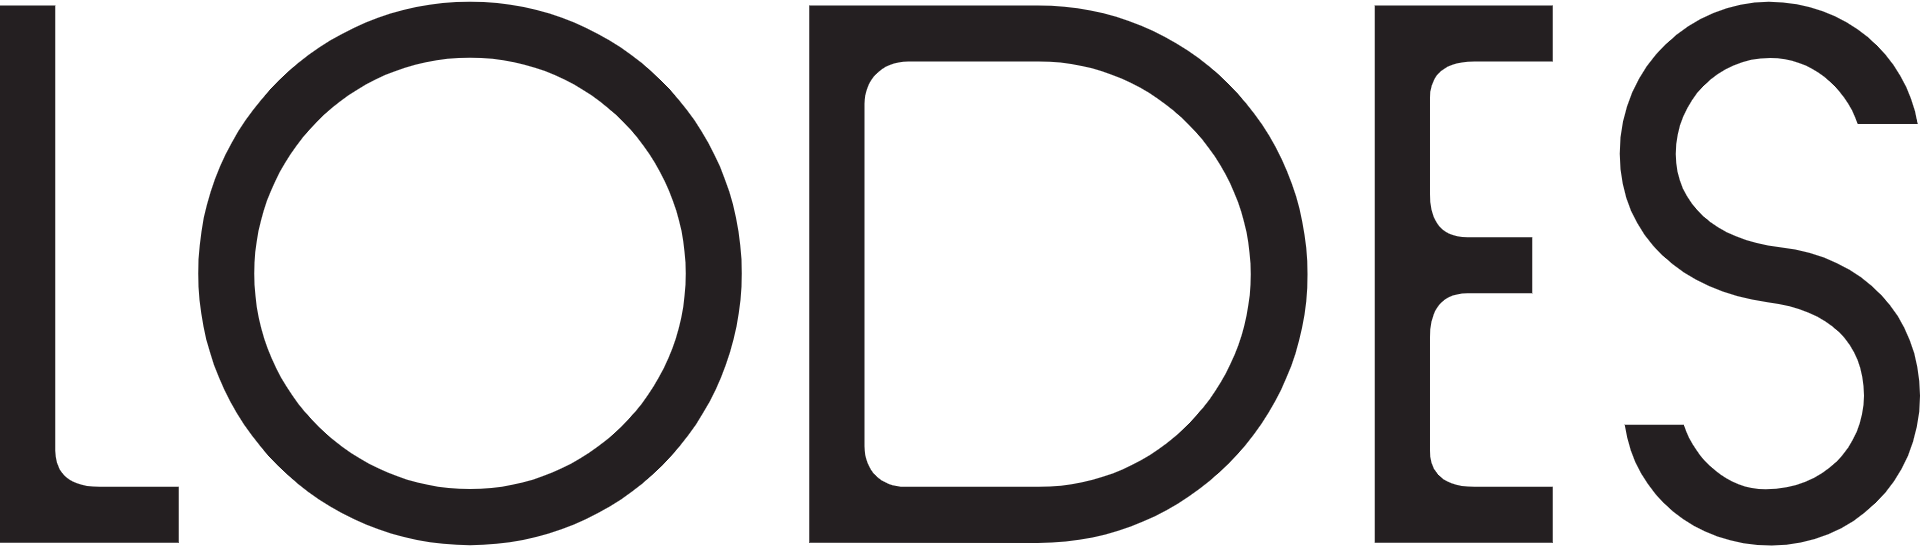 Lodes Logo